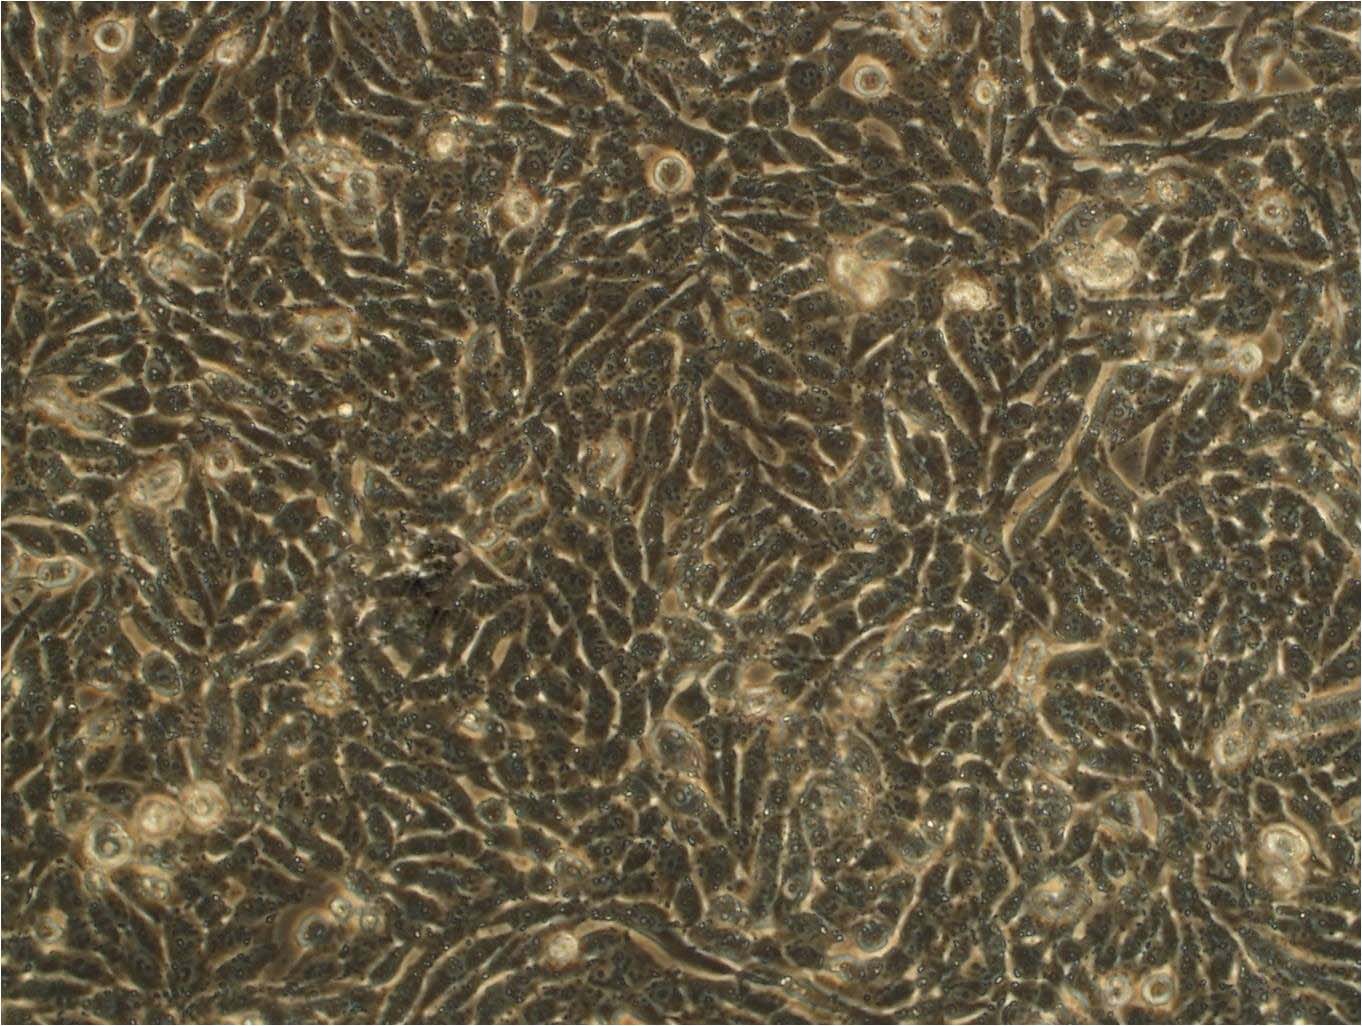 SK-N-BE(2)-M17 Cell|人成神经细胞,SK-N-BE(2)-M17 Cell